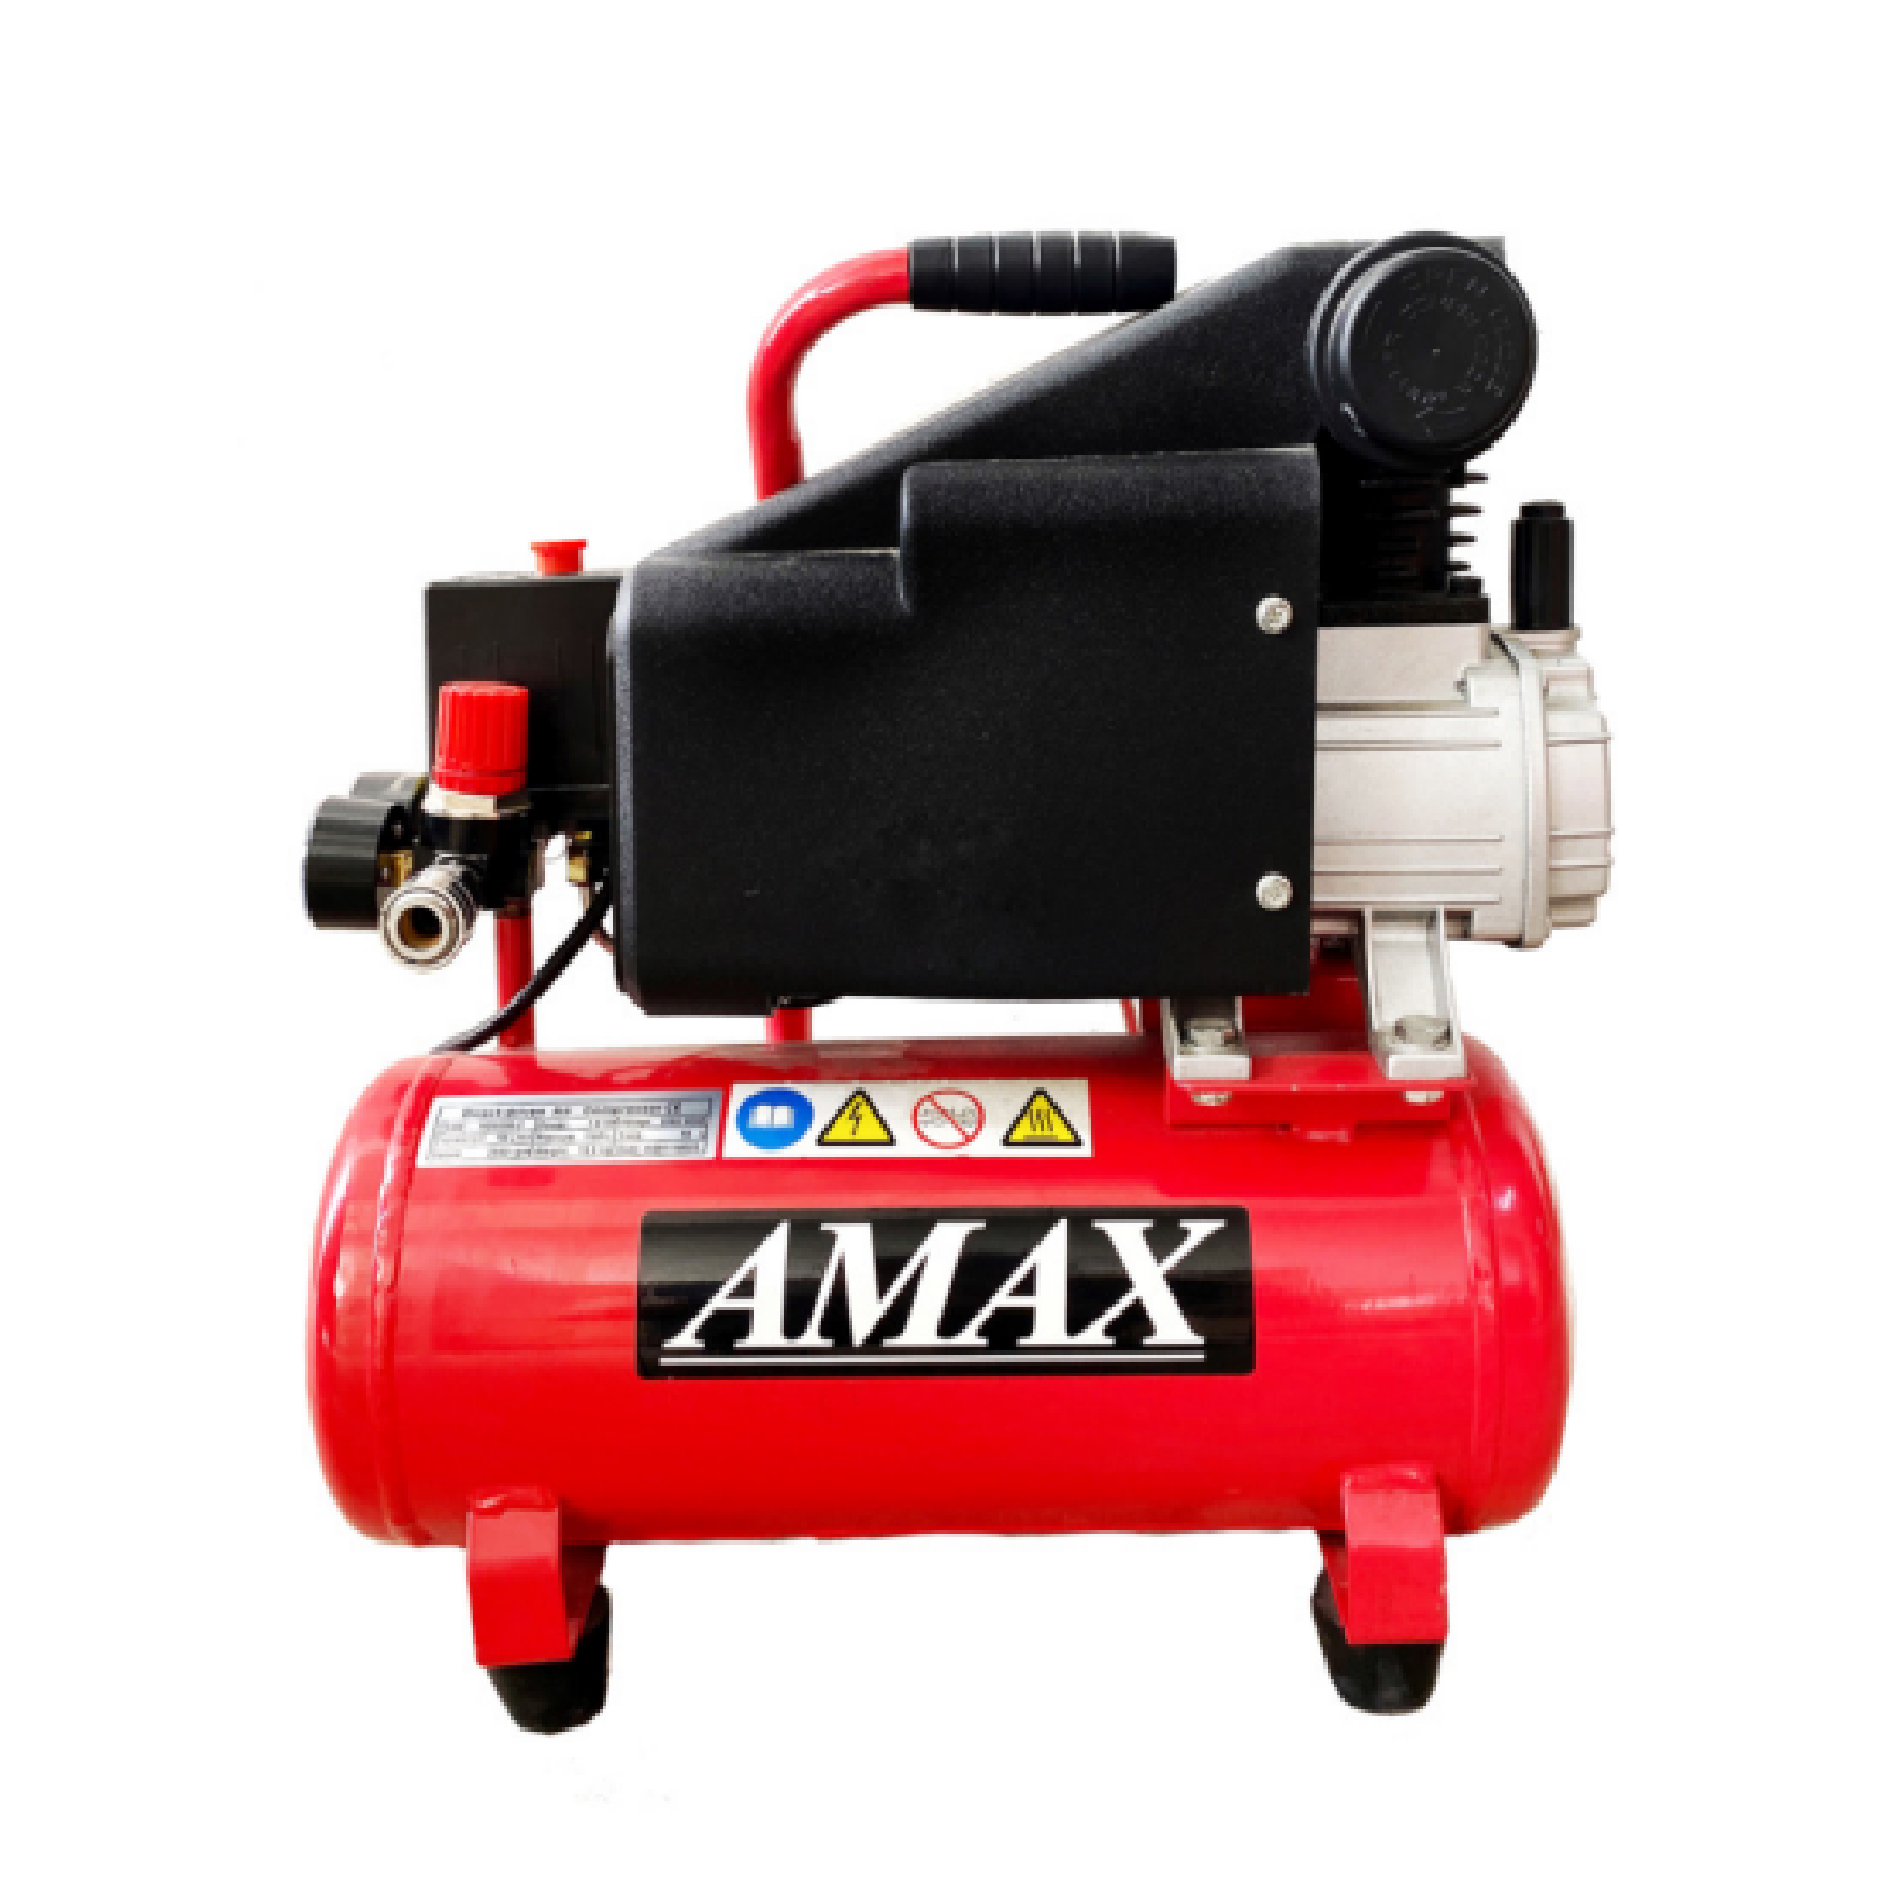 AMAX Air Compressor HOBBYIST 1.5HP X 6L HD0208-2